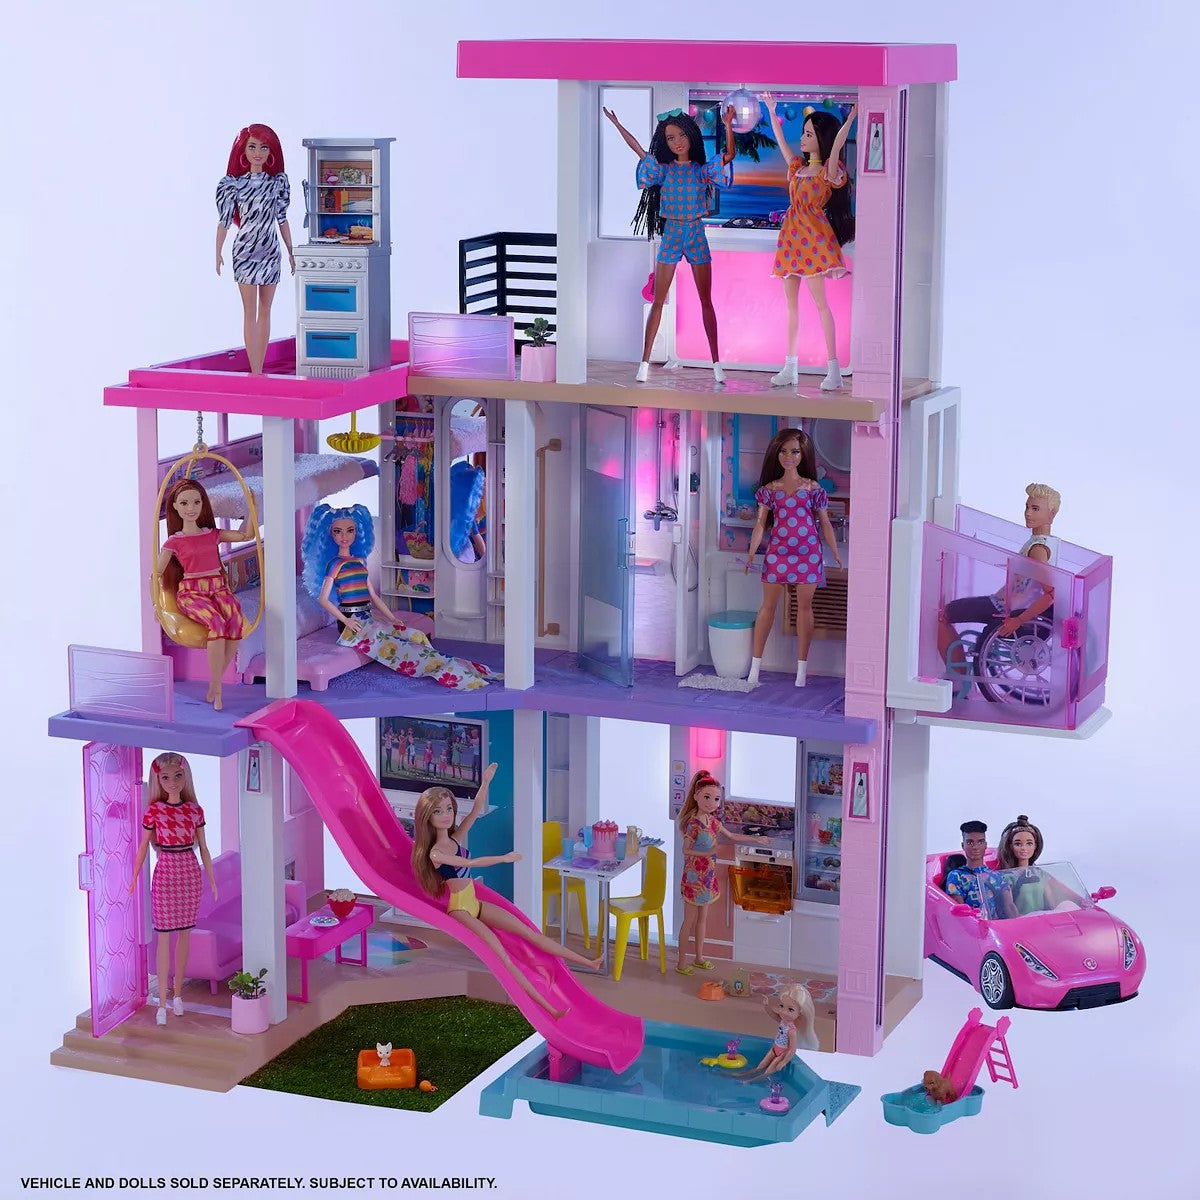 Dreamhouse Playset - Barbie